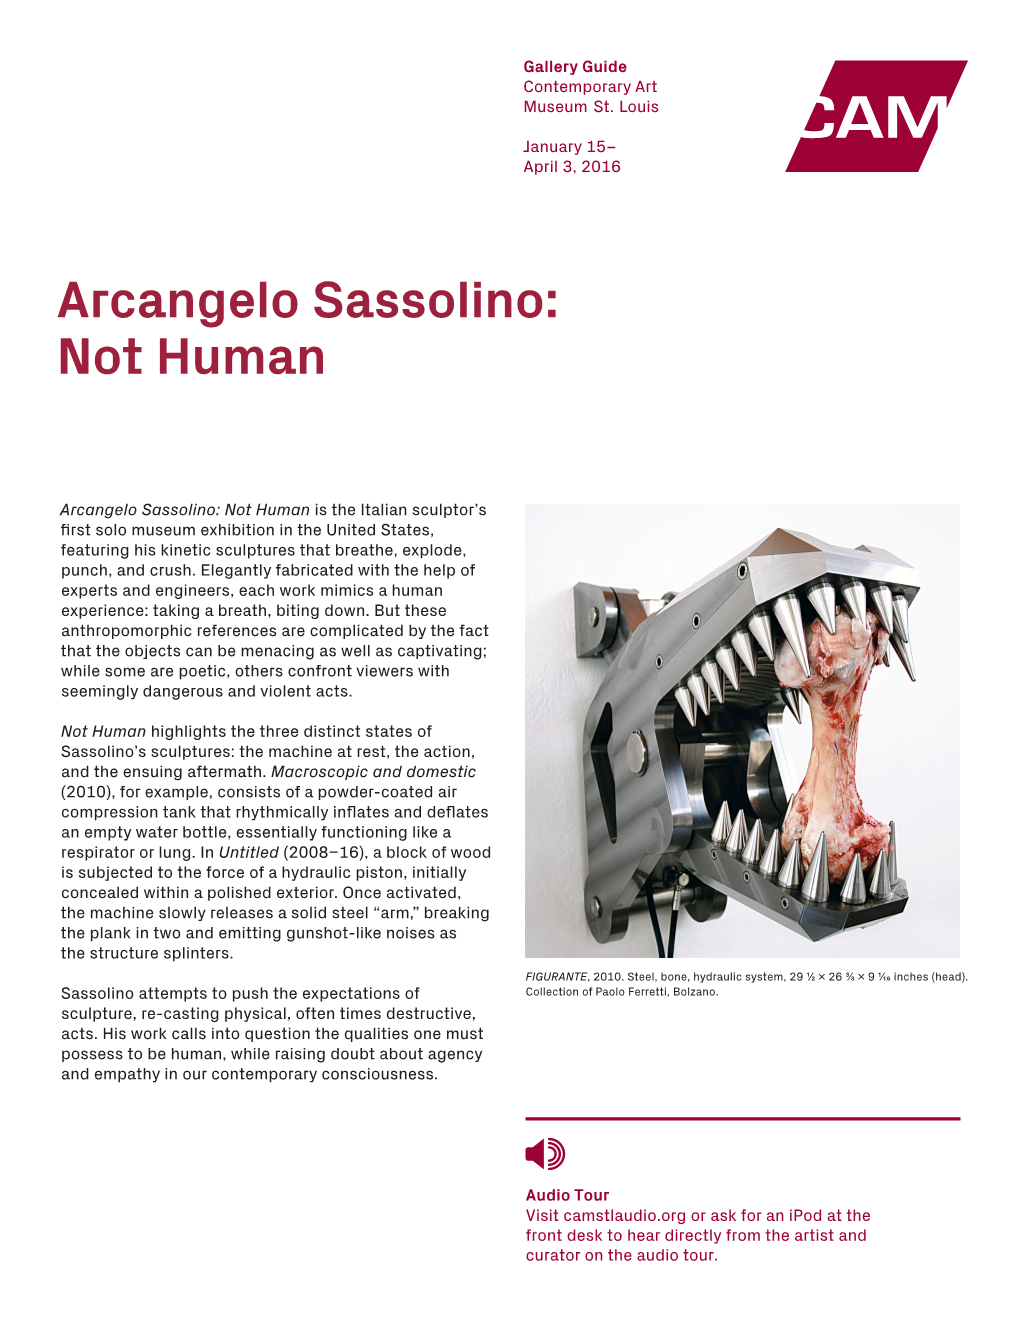 Arcangelo Sassolino: Not Human